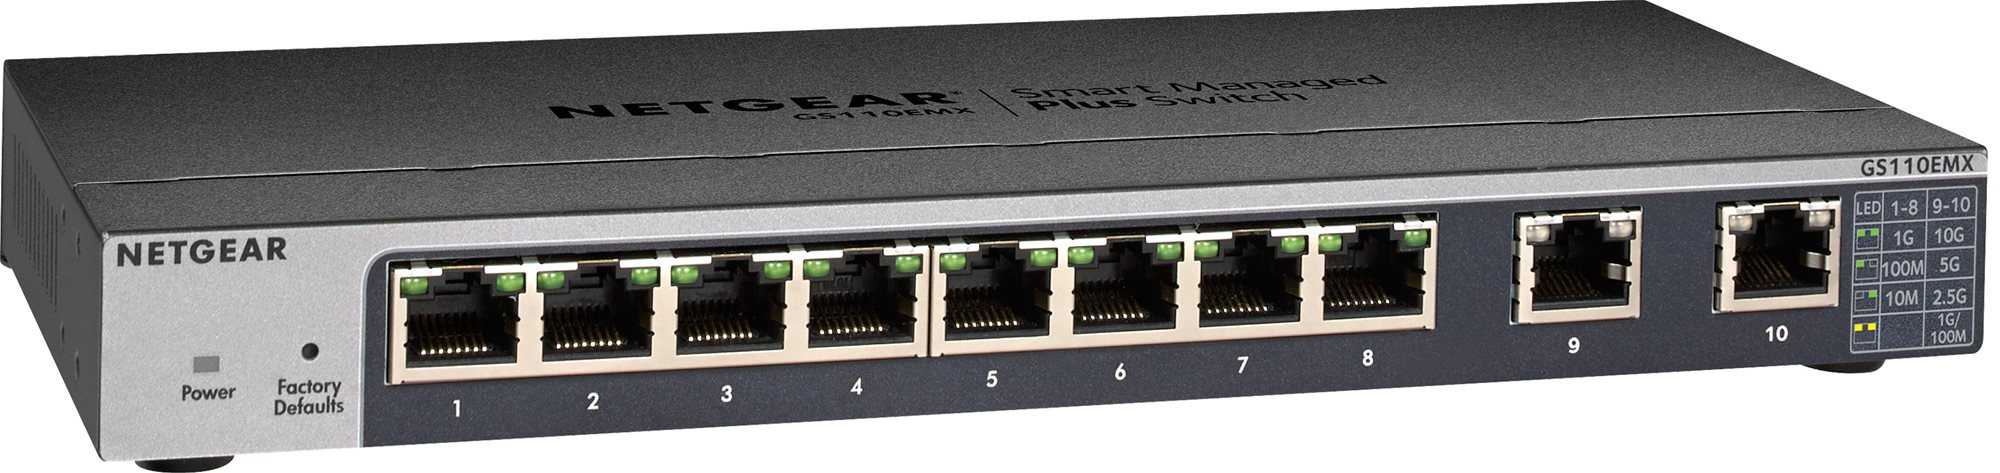 Switch Netgear GS110EMX